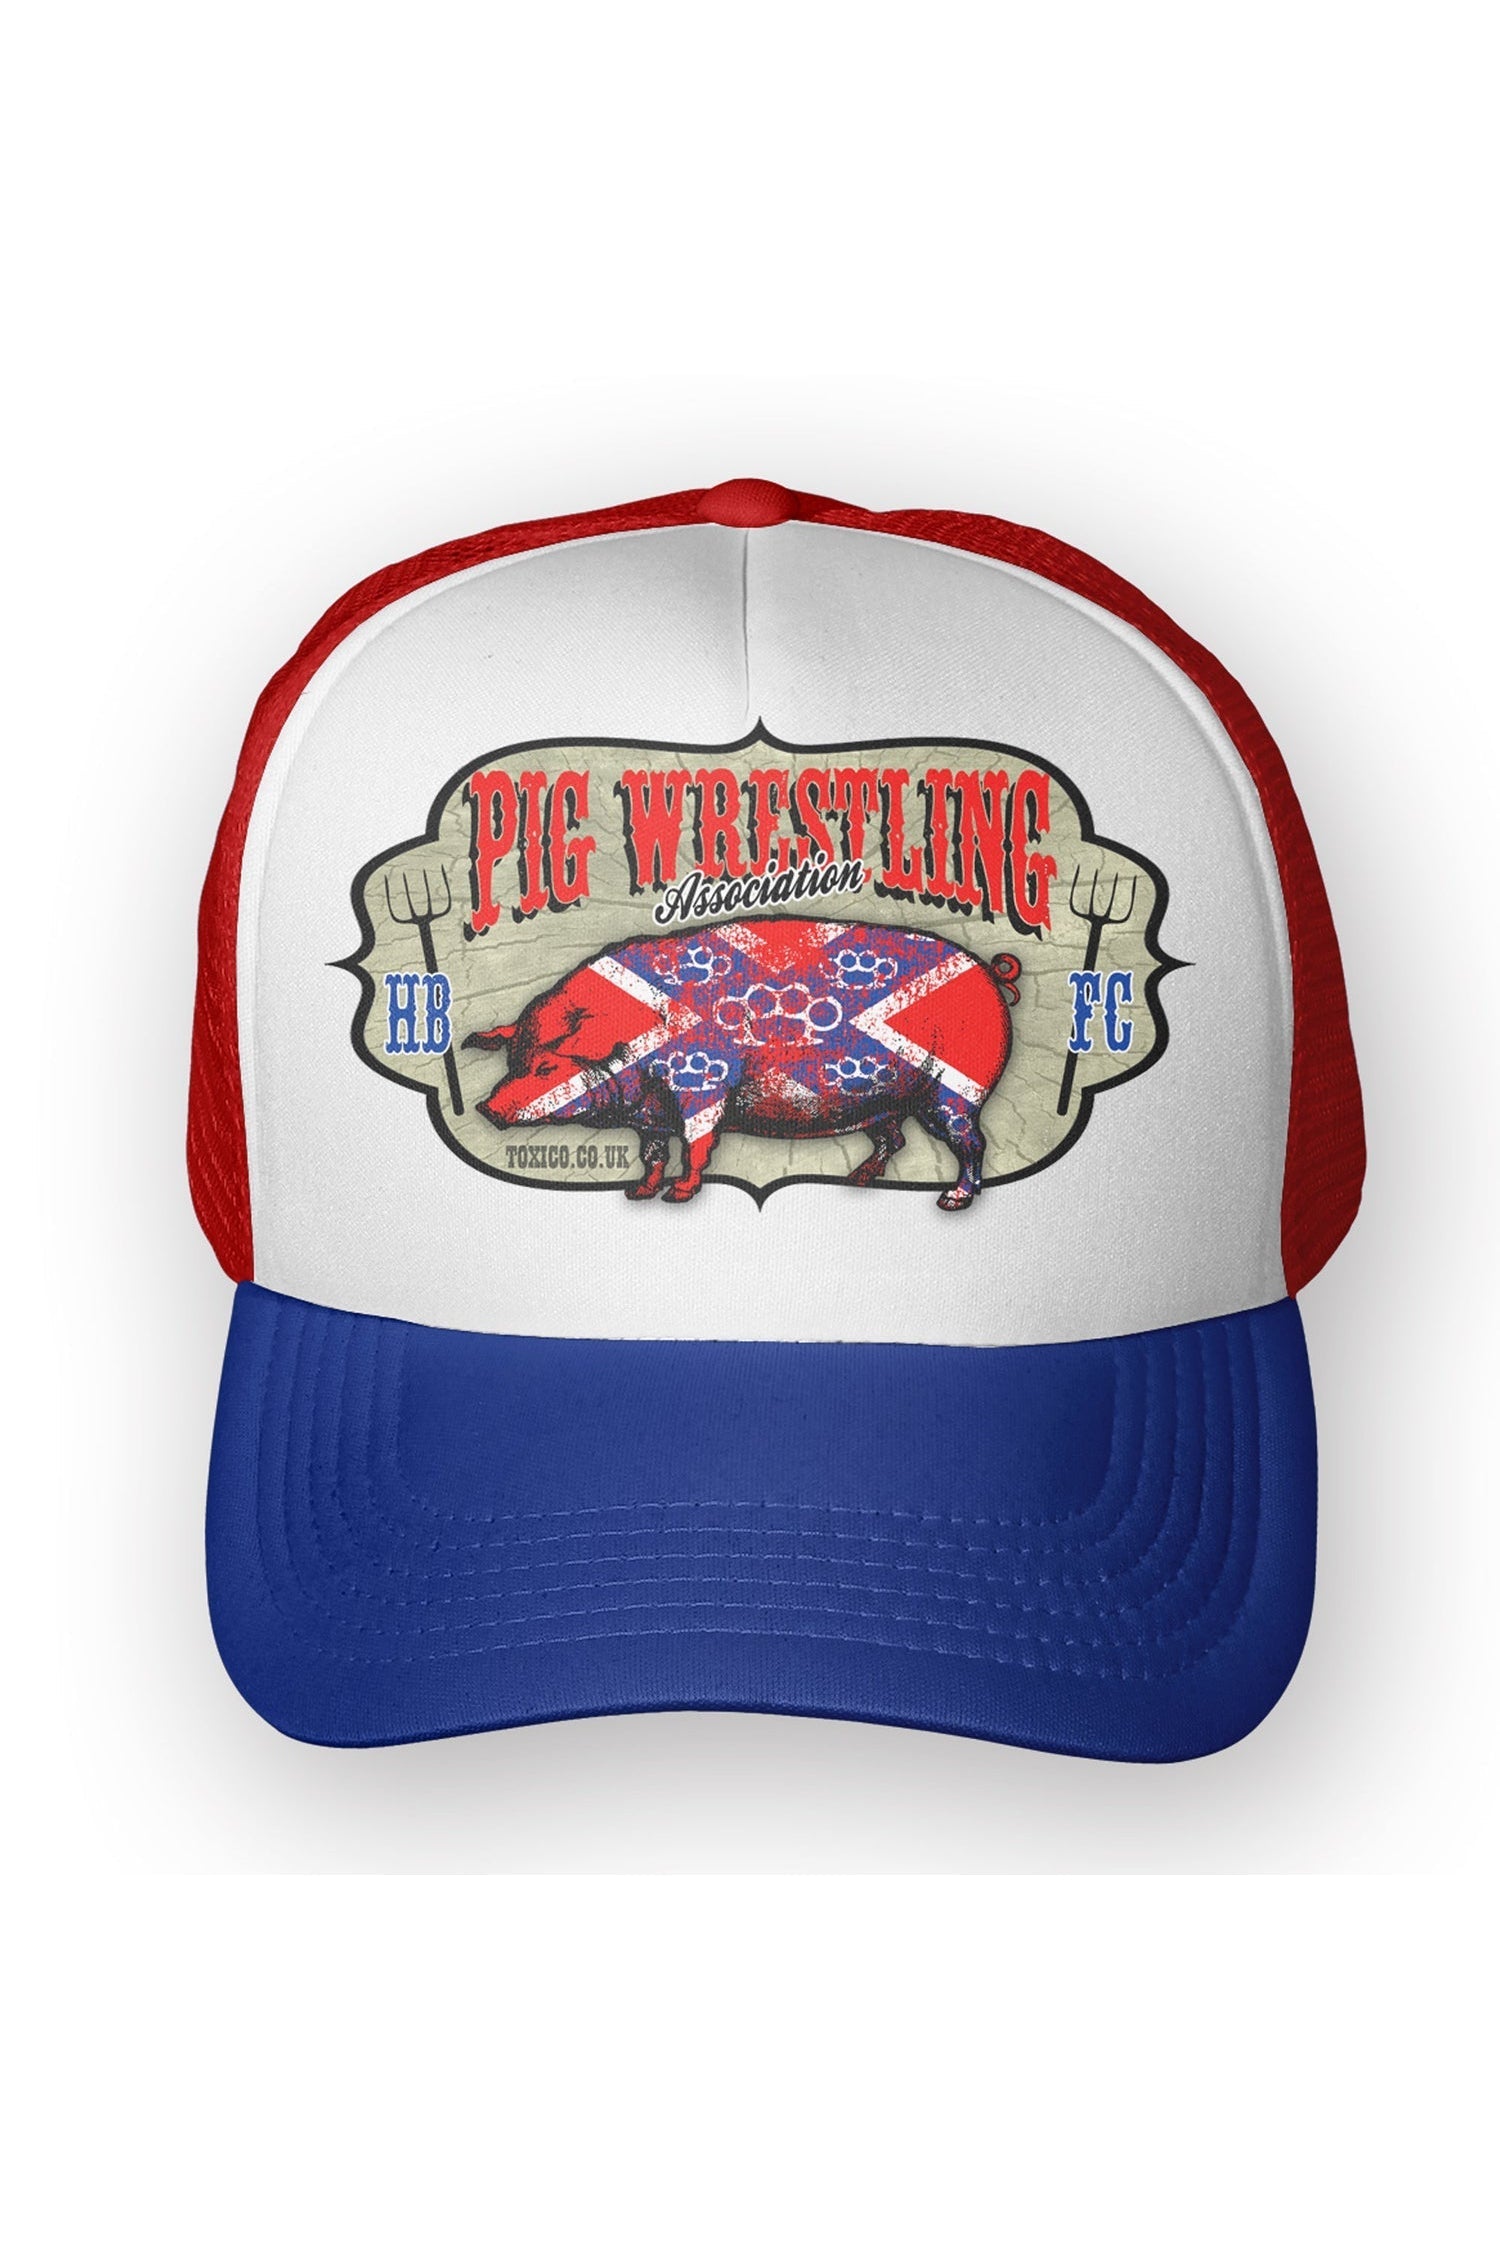 Pig Wrestling Trucker Hat-Toxico-Dark Fashion Clothing